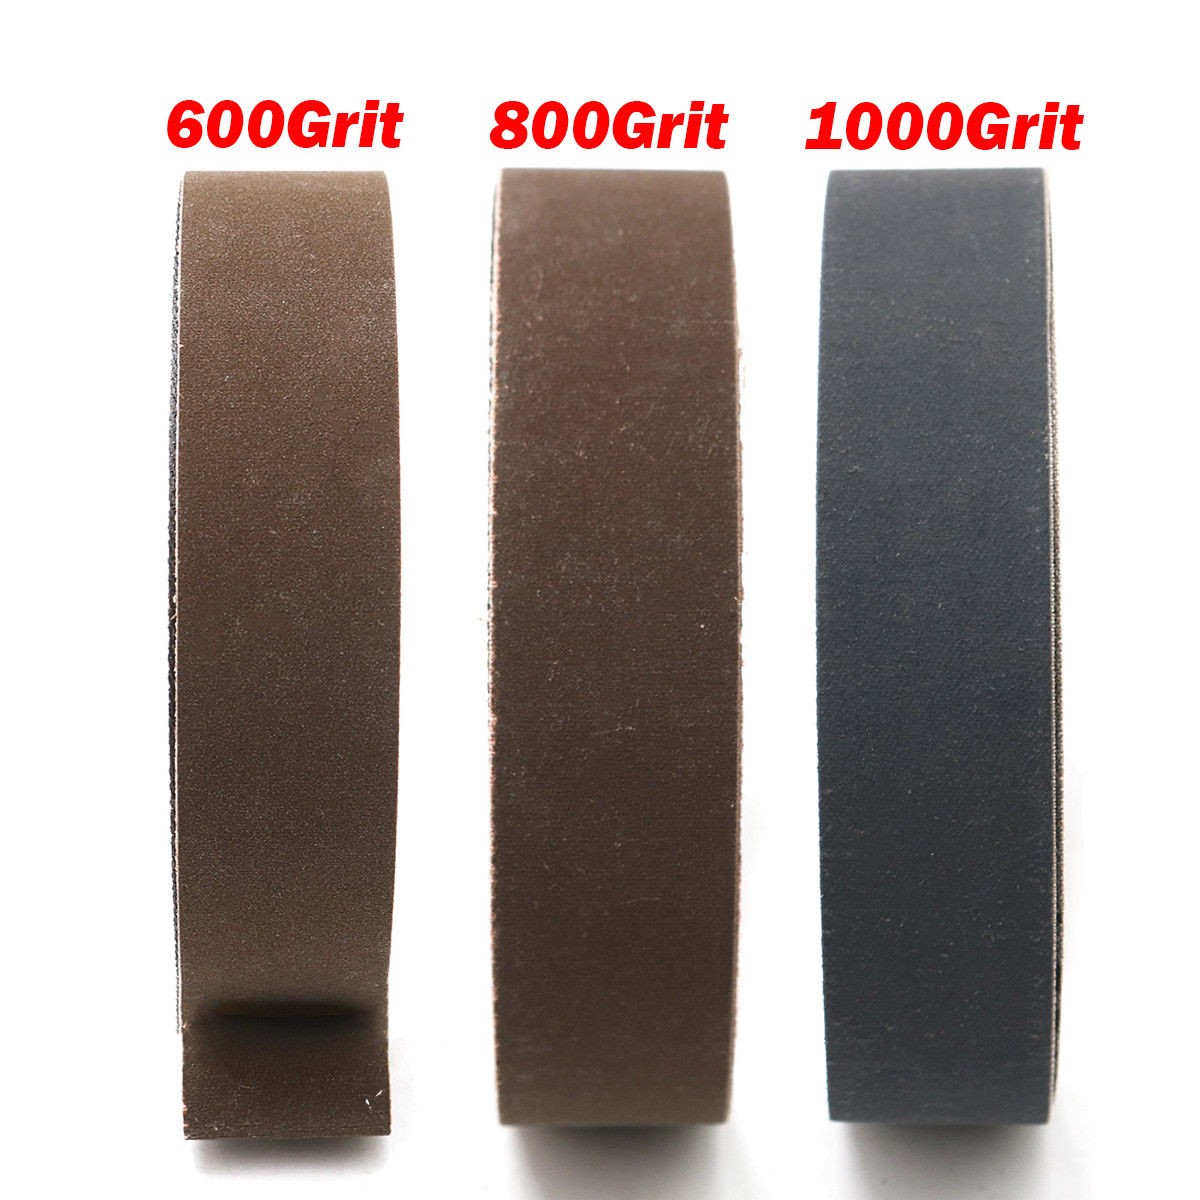 1 x 30 inch sanding belts, 15 pcs, 600 800 1000 high grit, aluminum oxide 25mm width/1 inch length 762mm/30 inch